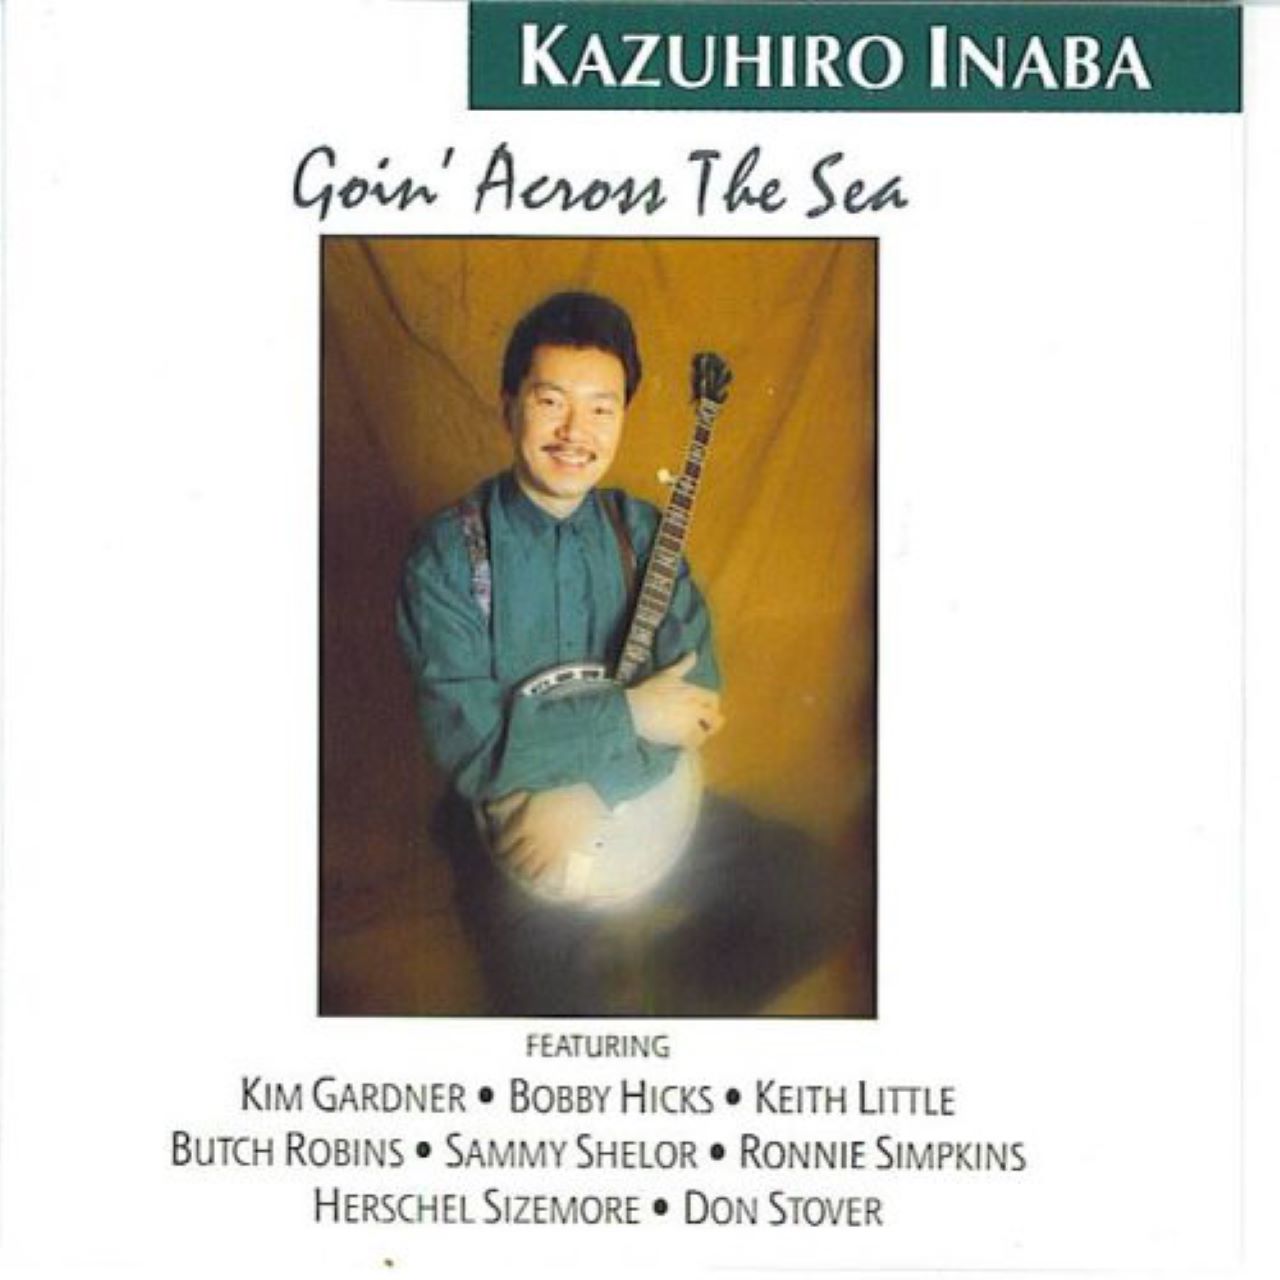 Kazuhiro Inaba - Goin' Across The Sea cover album